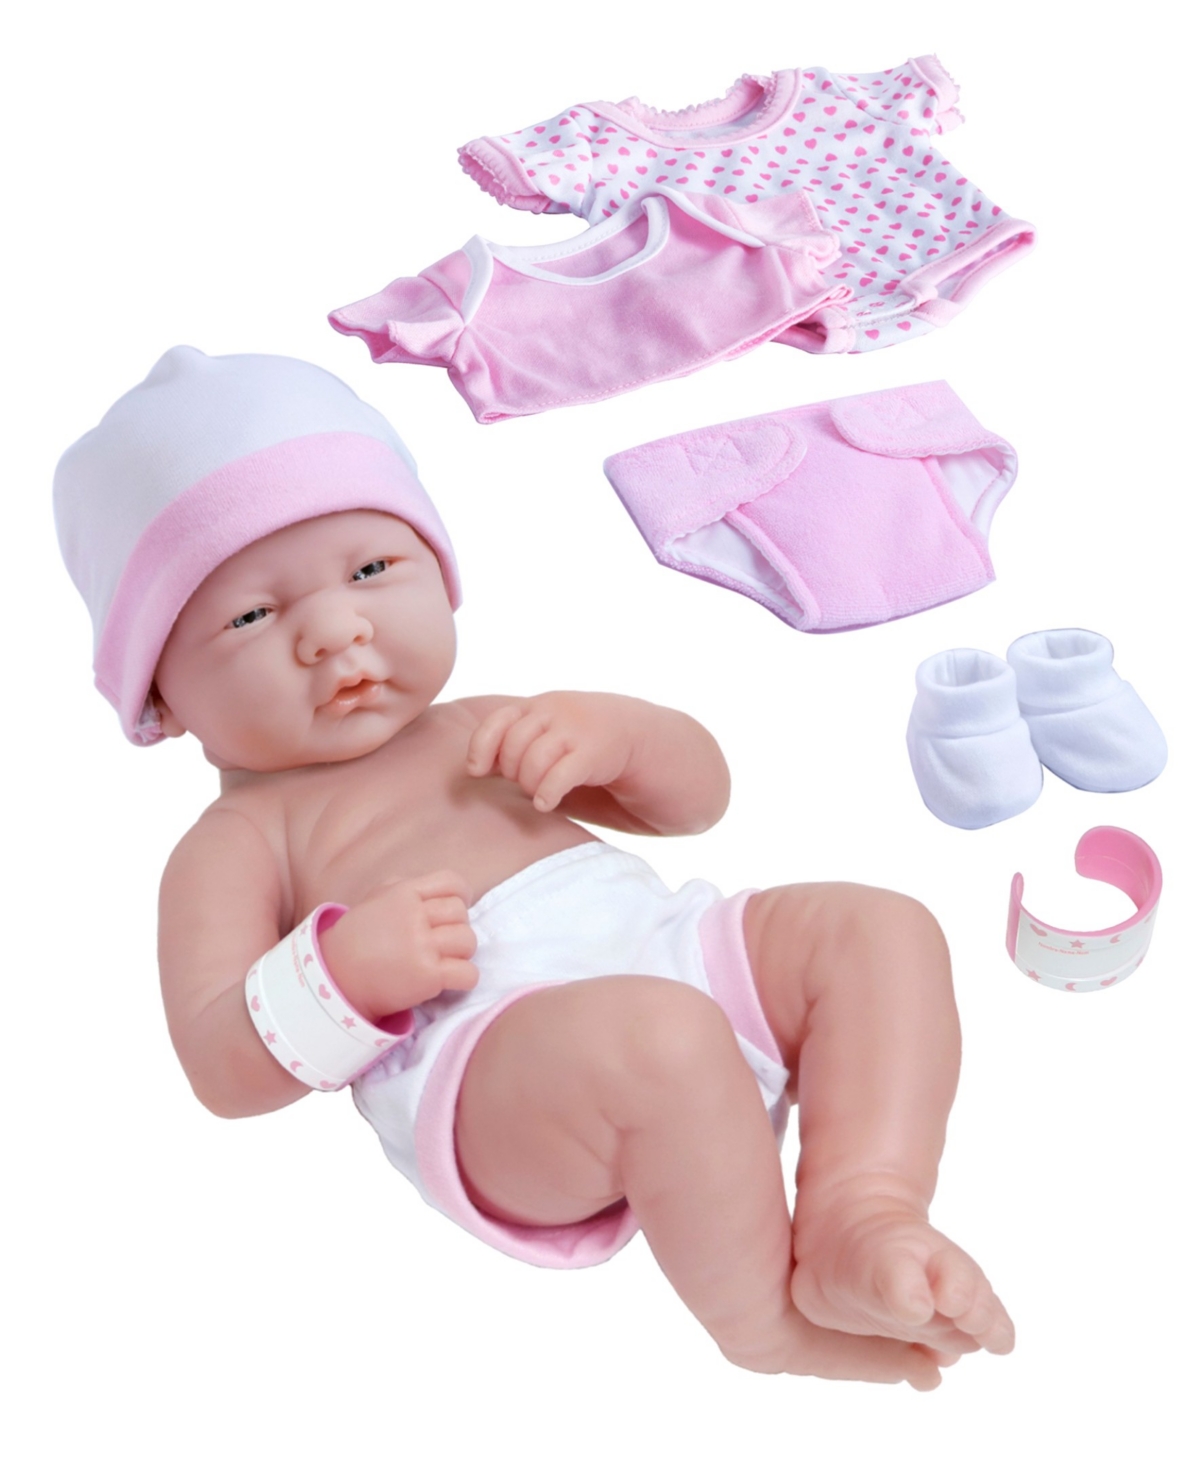 Jc Toys La Newborn Nursery 14" Baby Doll 8 Pcs Pink Gift Set In Soft Tender Face - Pink